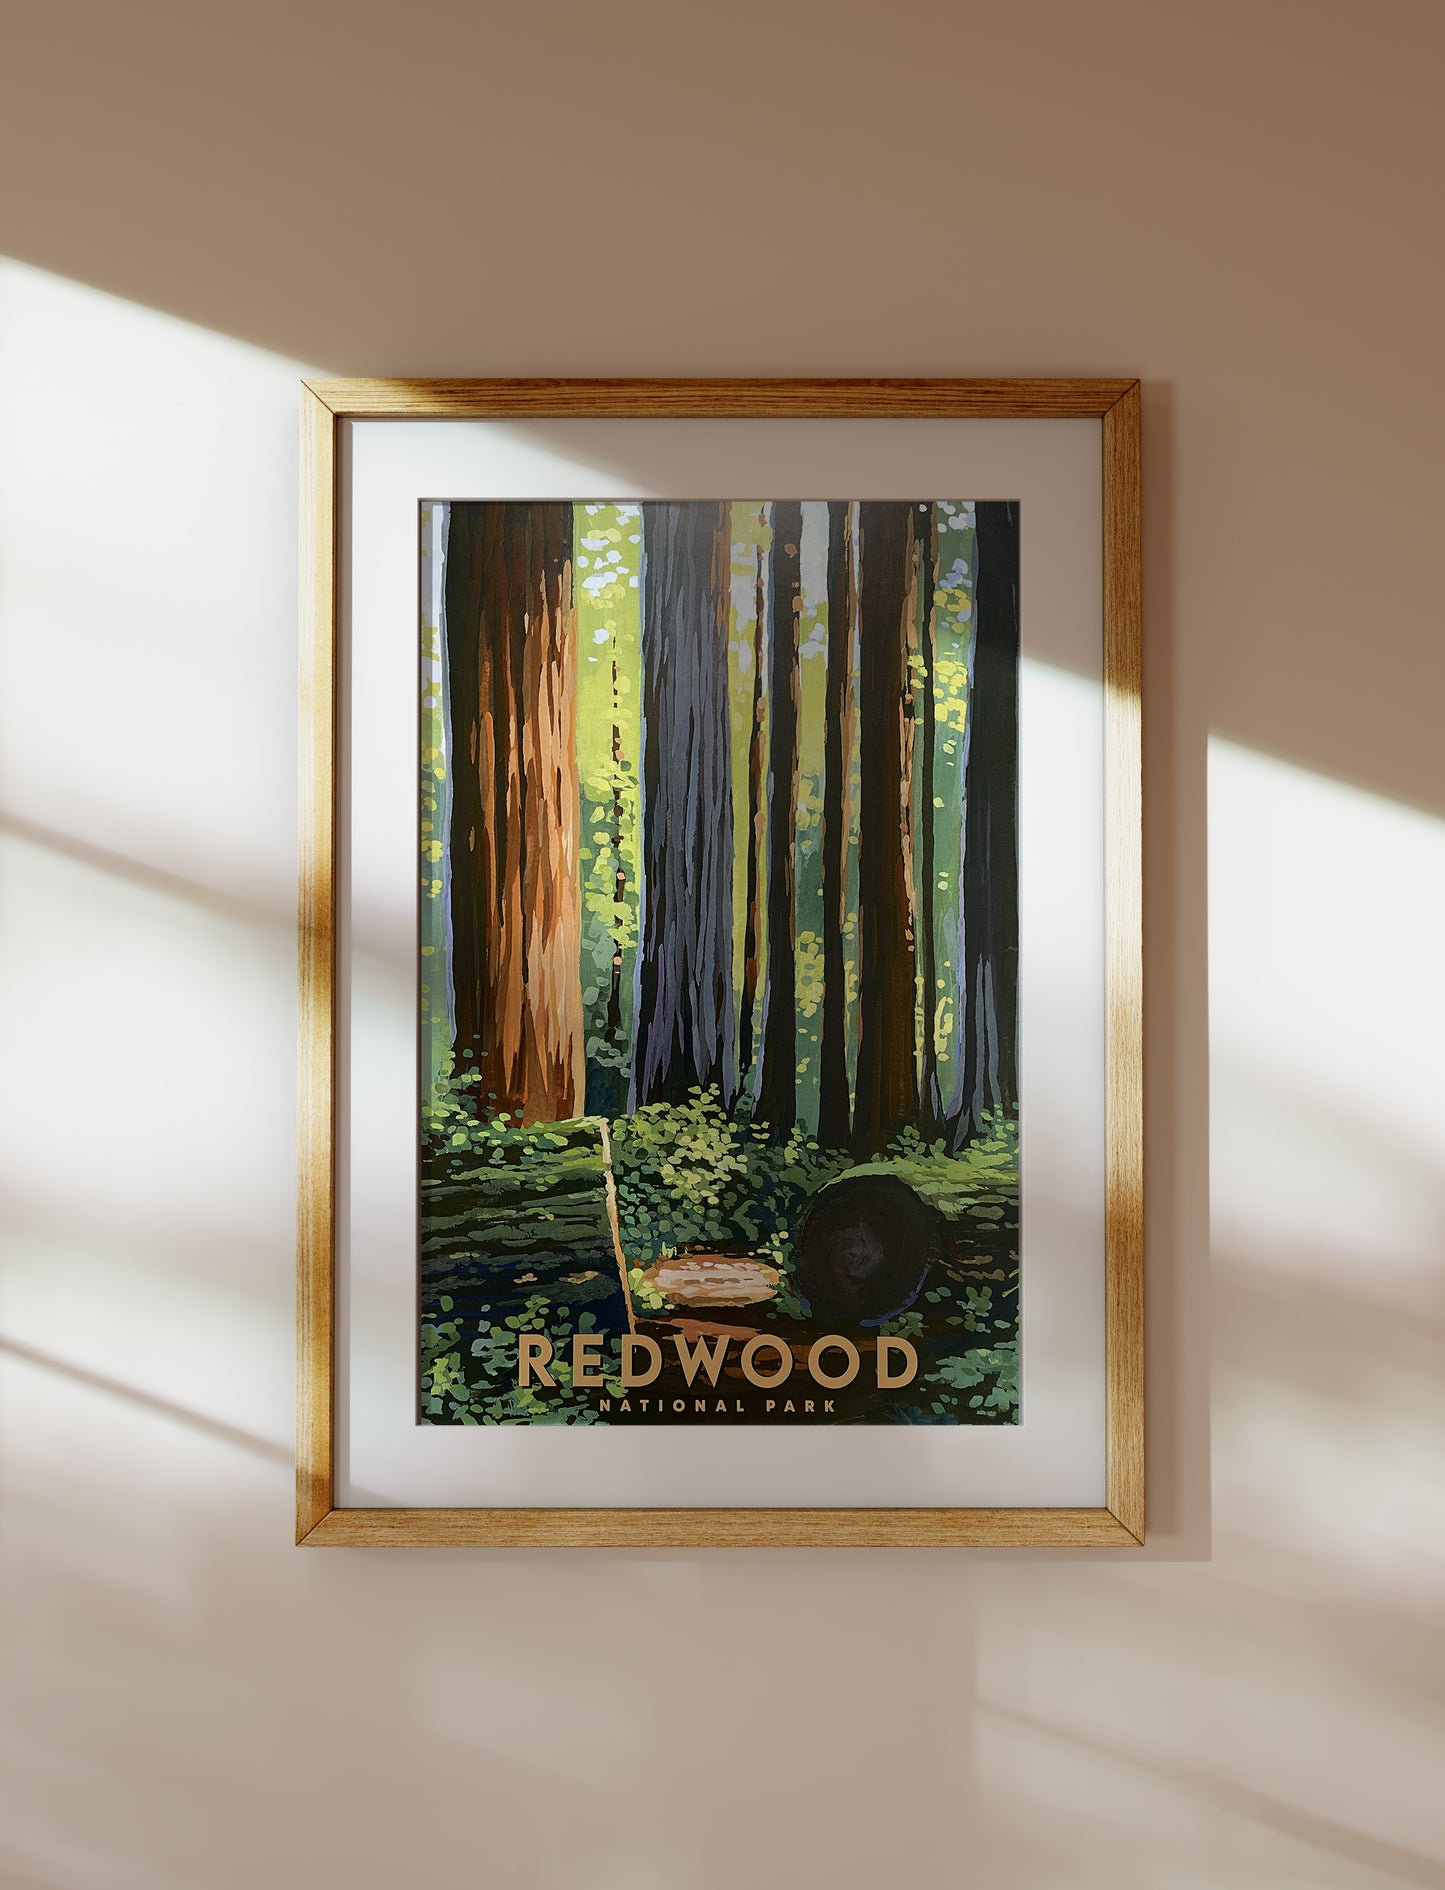 'Redwood' National Park Travel Poster